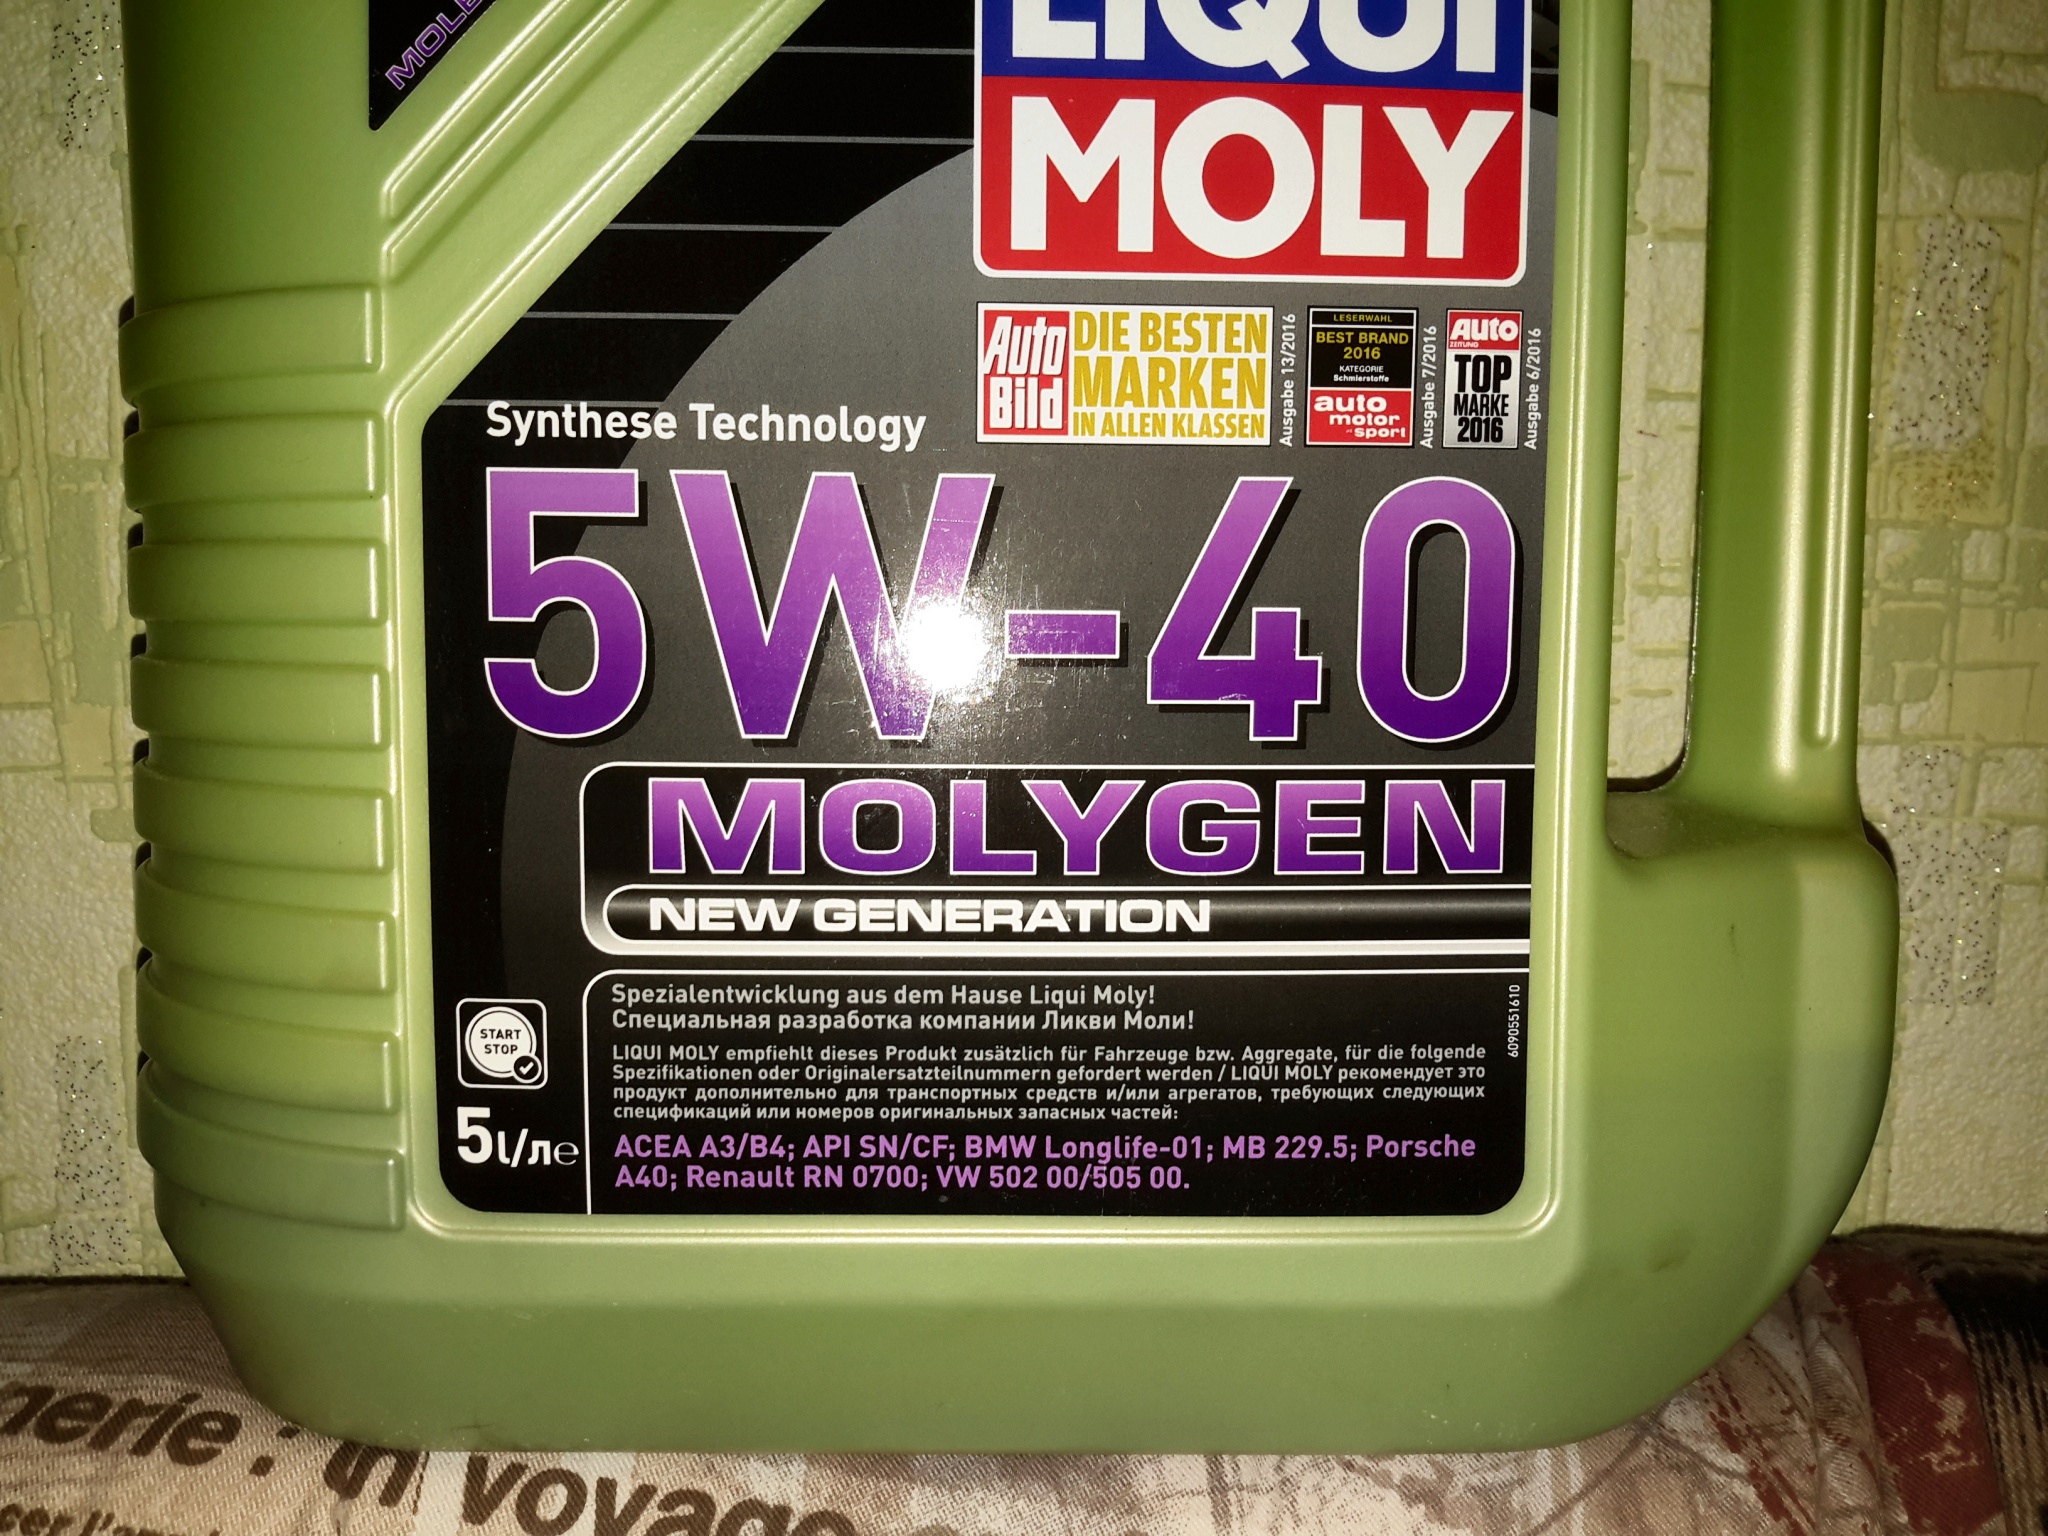 Ликви моли молиген. Molygen 5w-40. Liqui Moly Molygen New Generation 5w-40 цвет. Liqui Moly масло моторное Molygen New Generation.